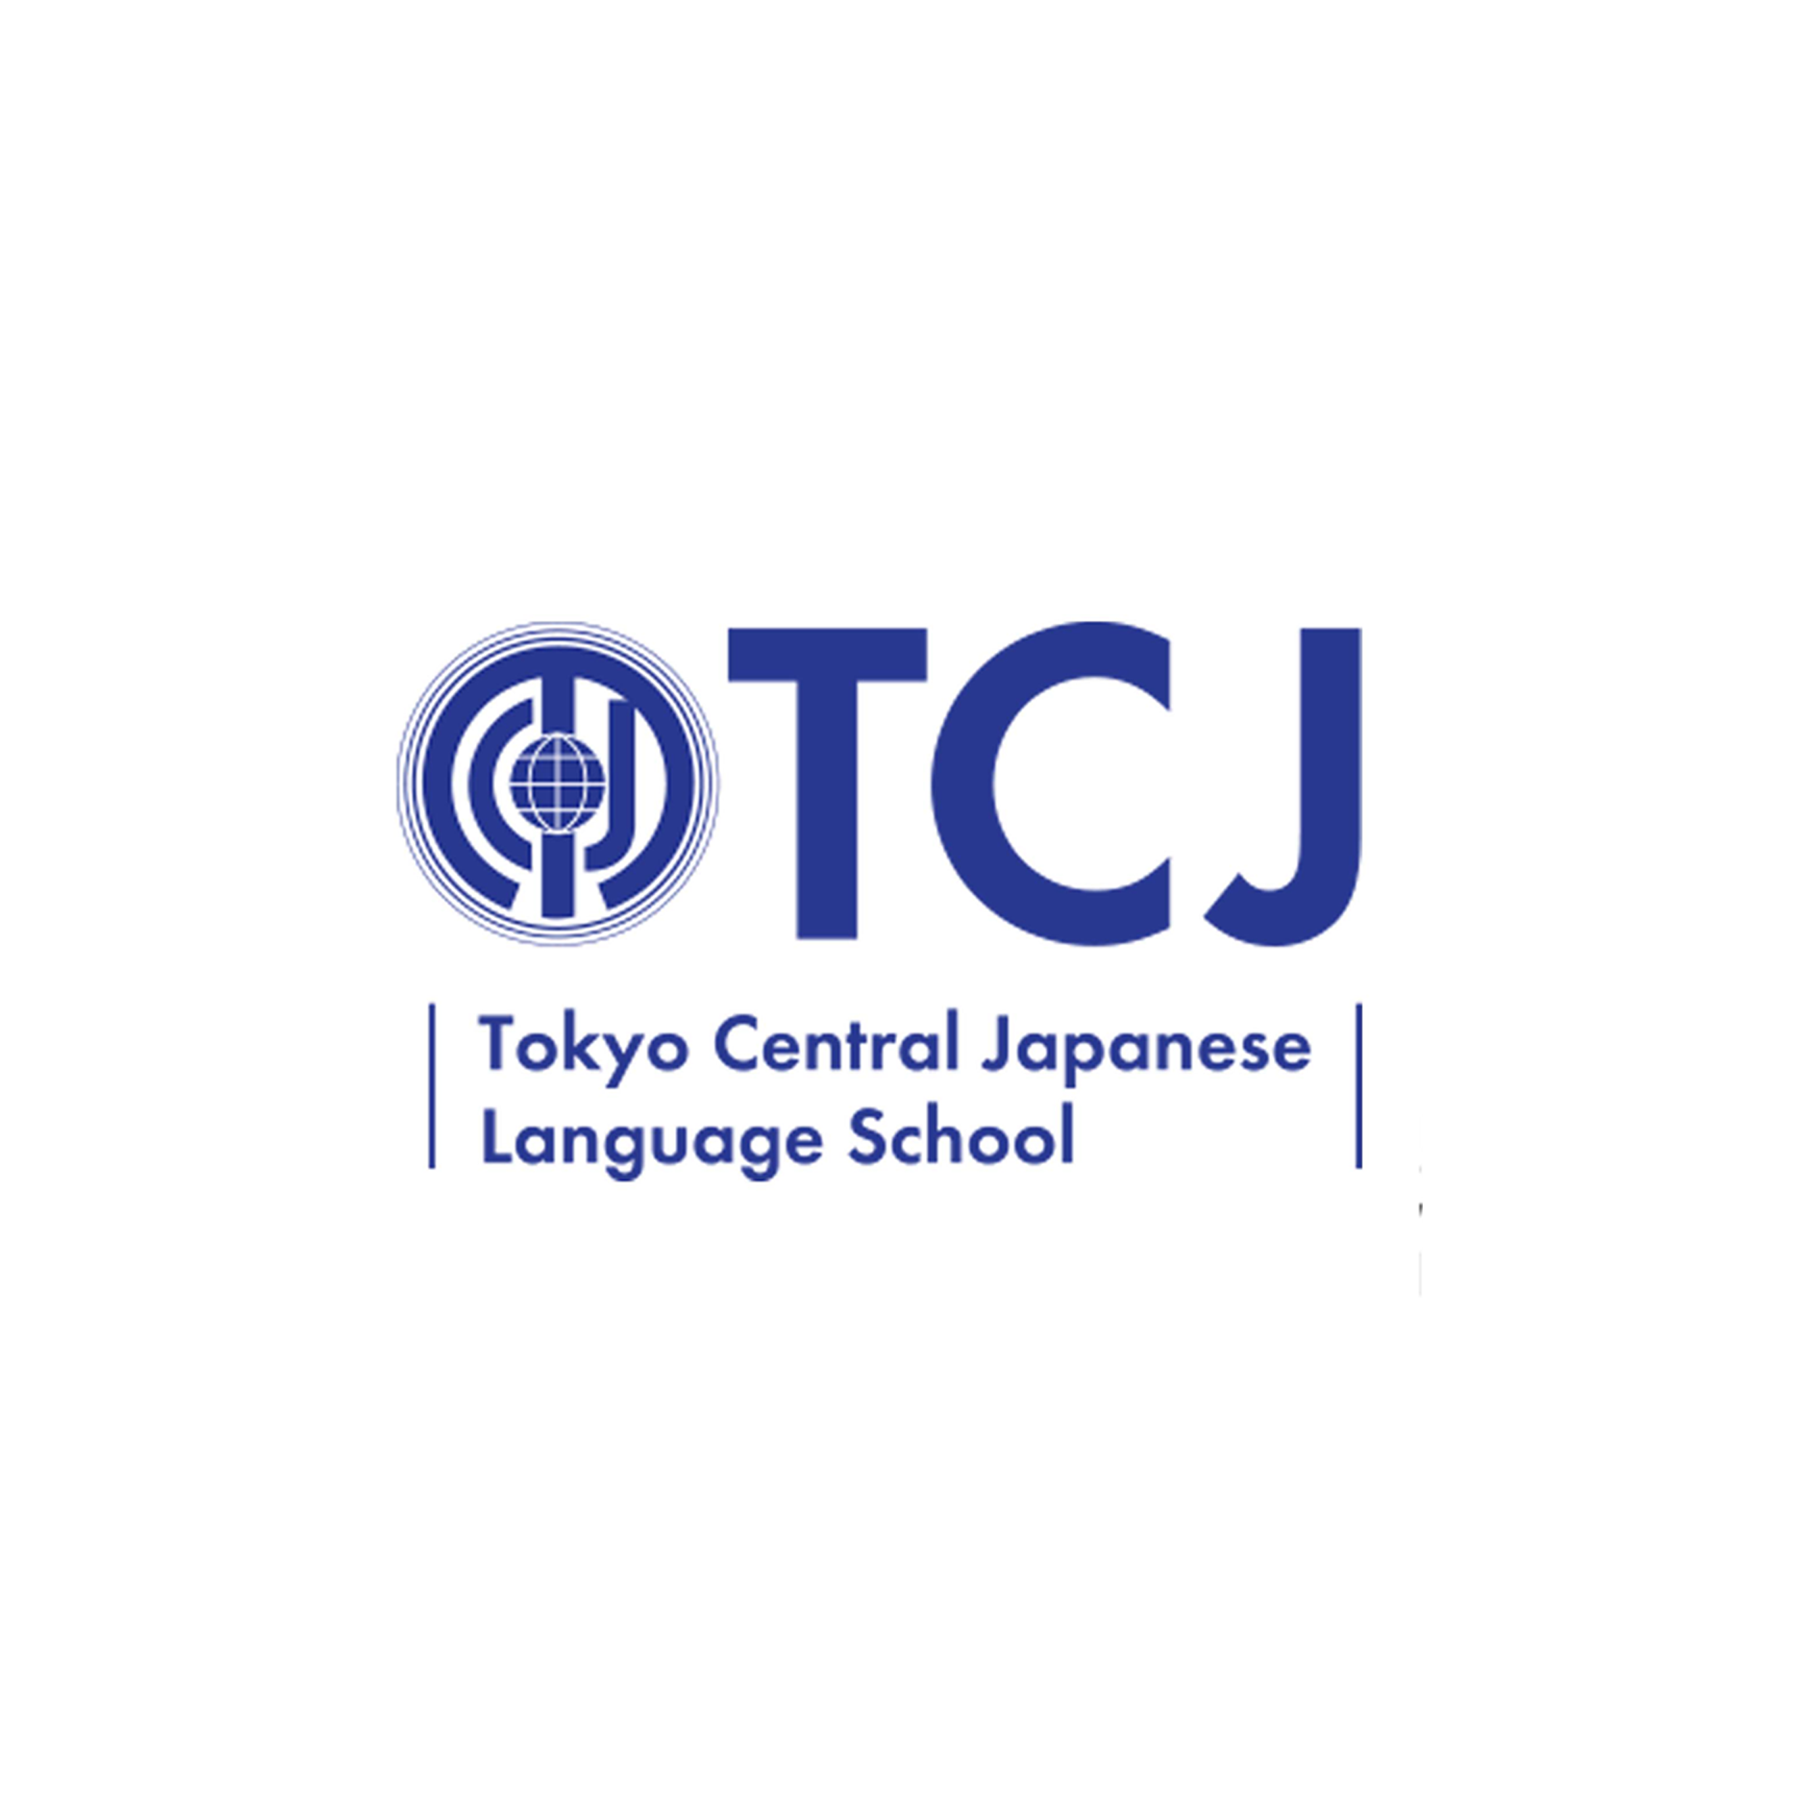 TOUA International Language School